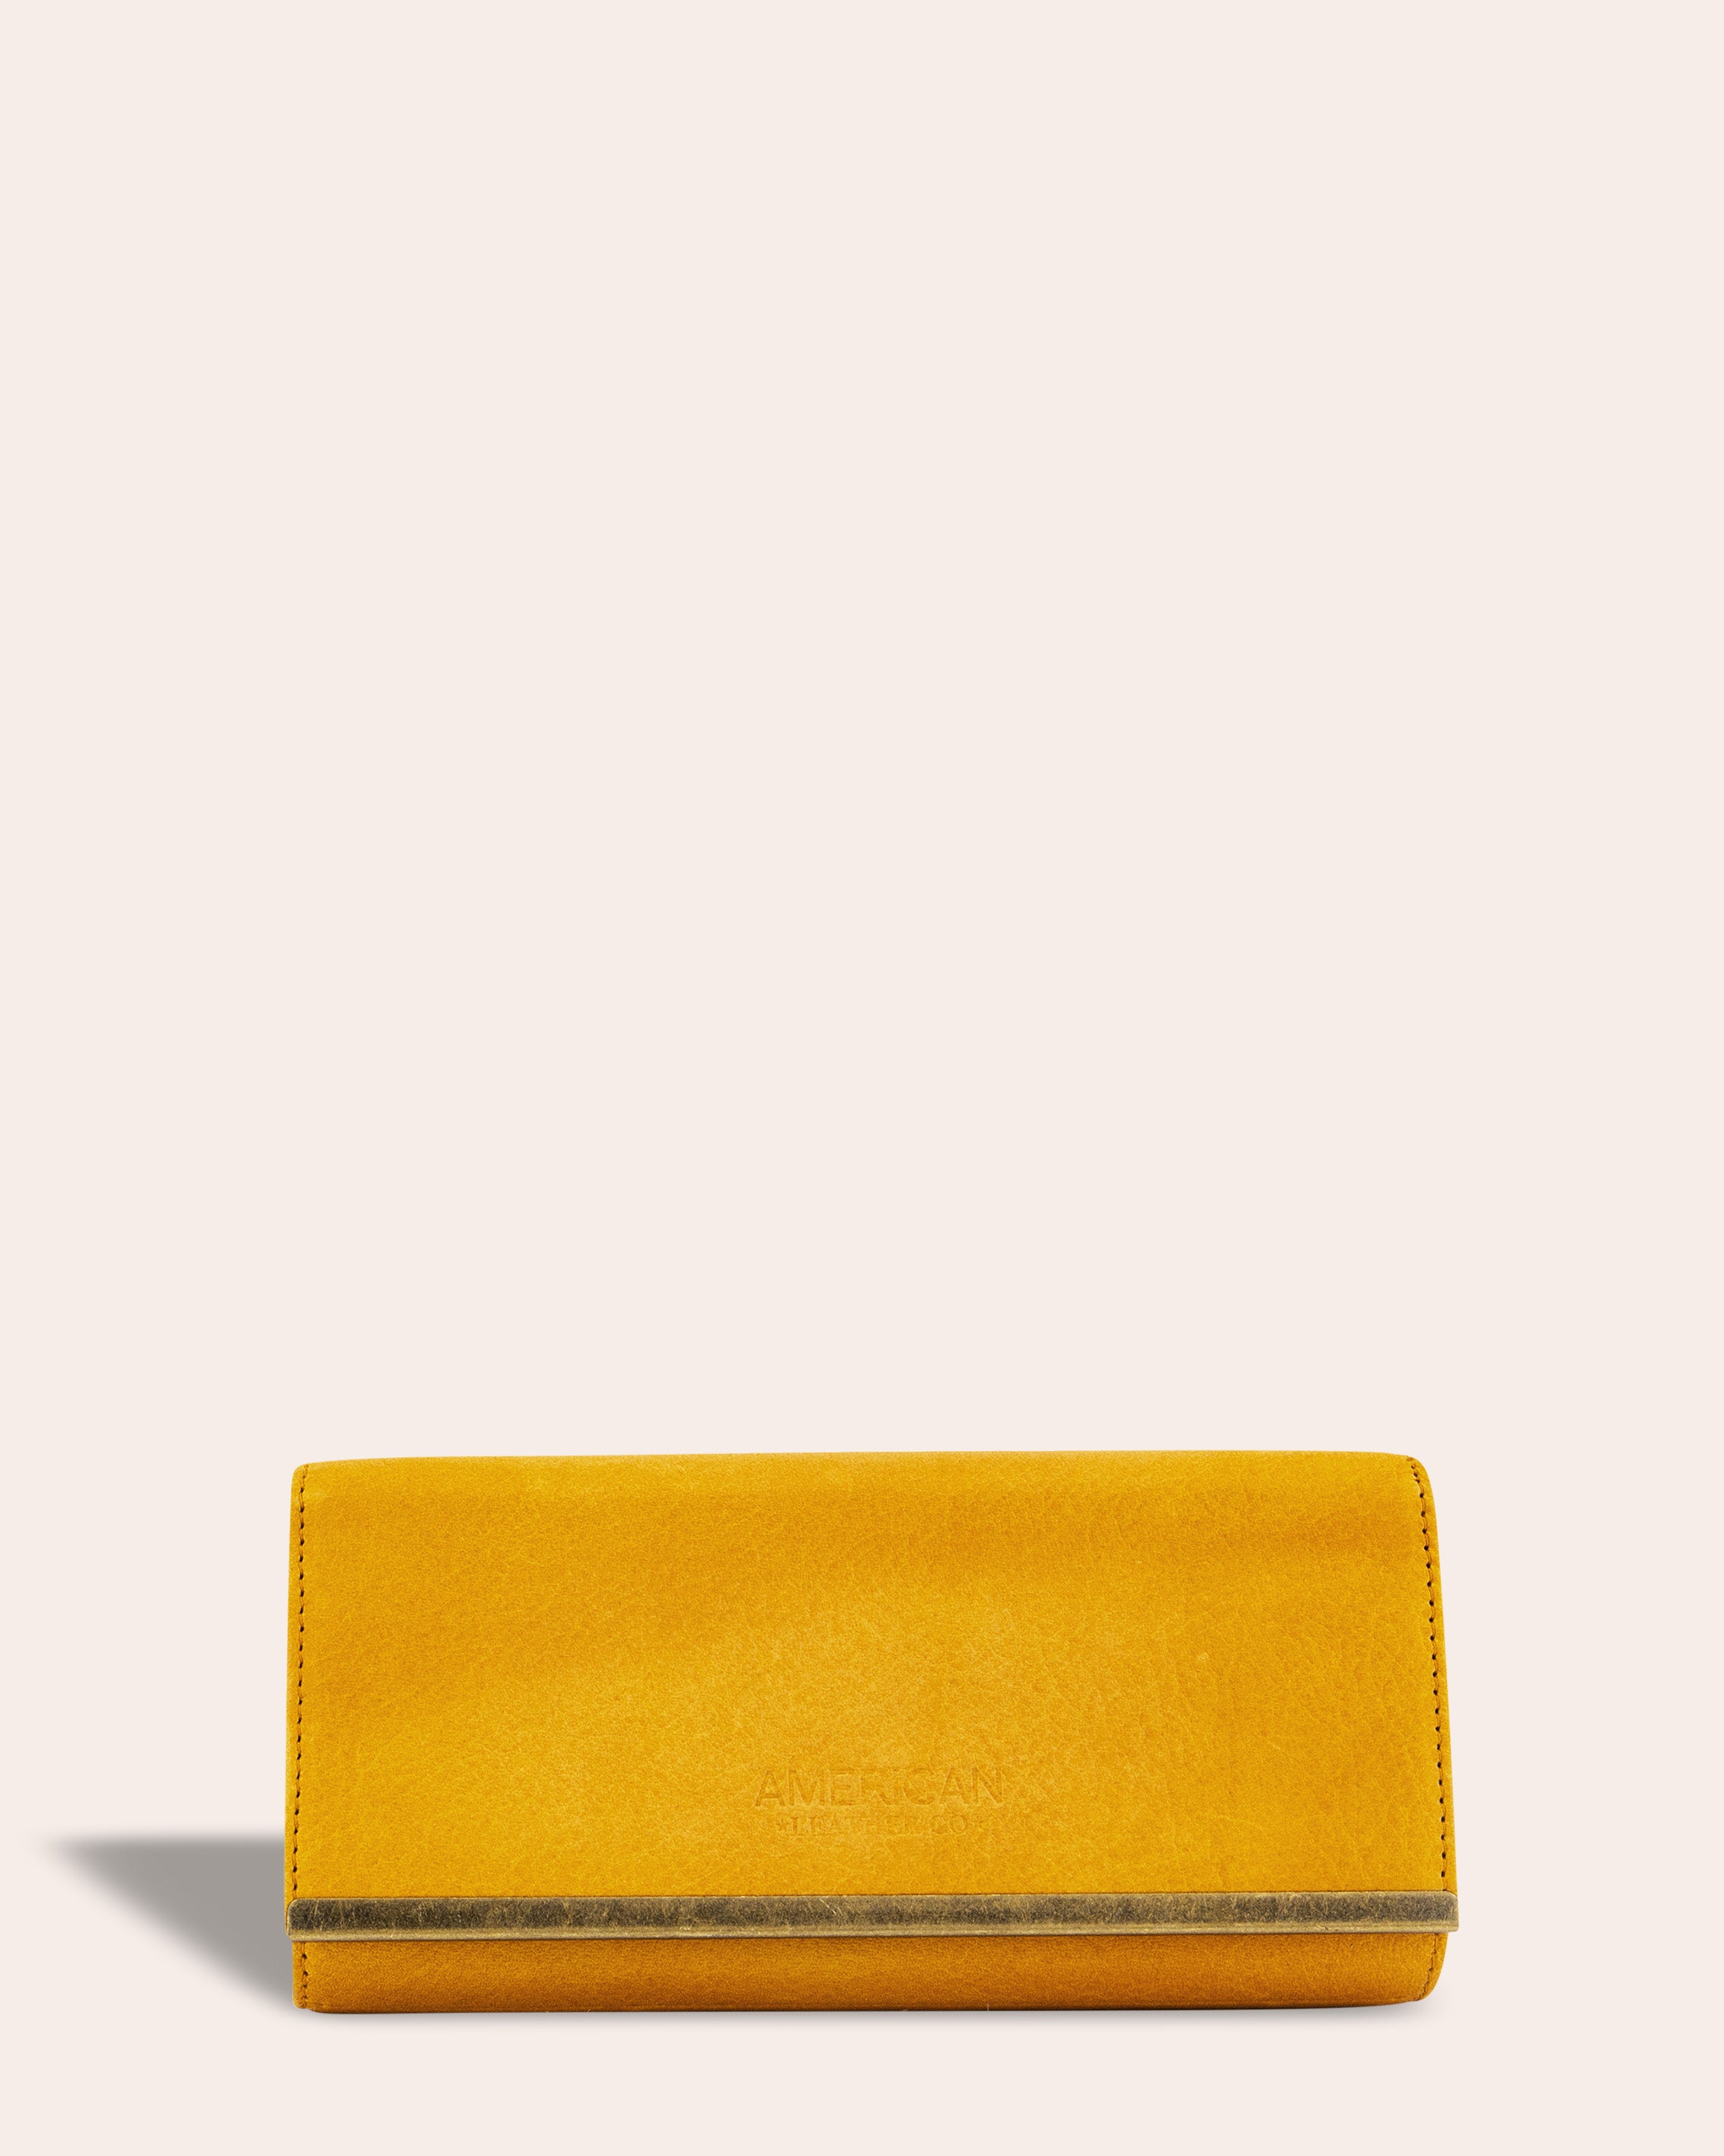 American Leather Co. Jackson Wallet Mustard